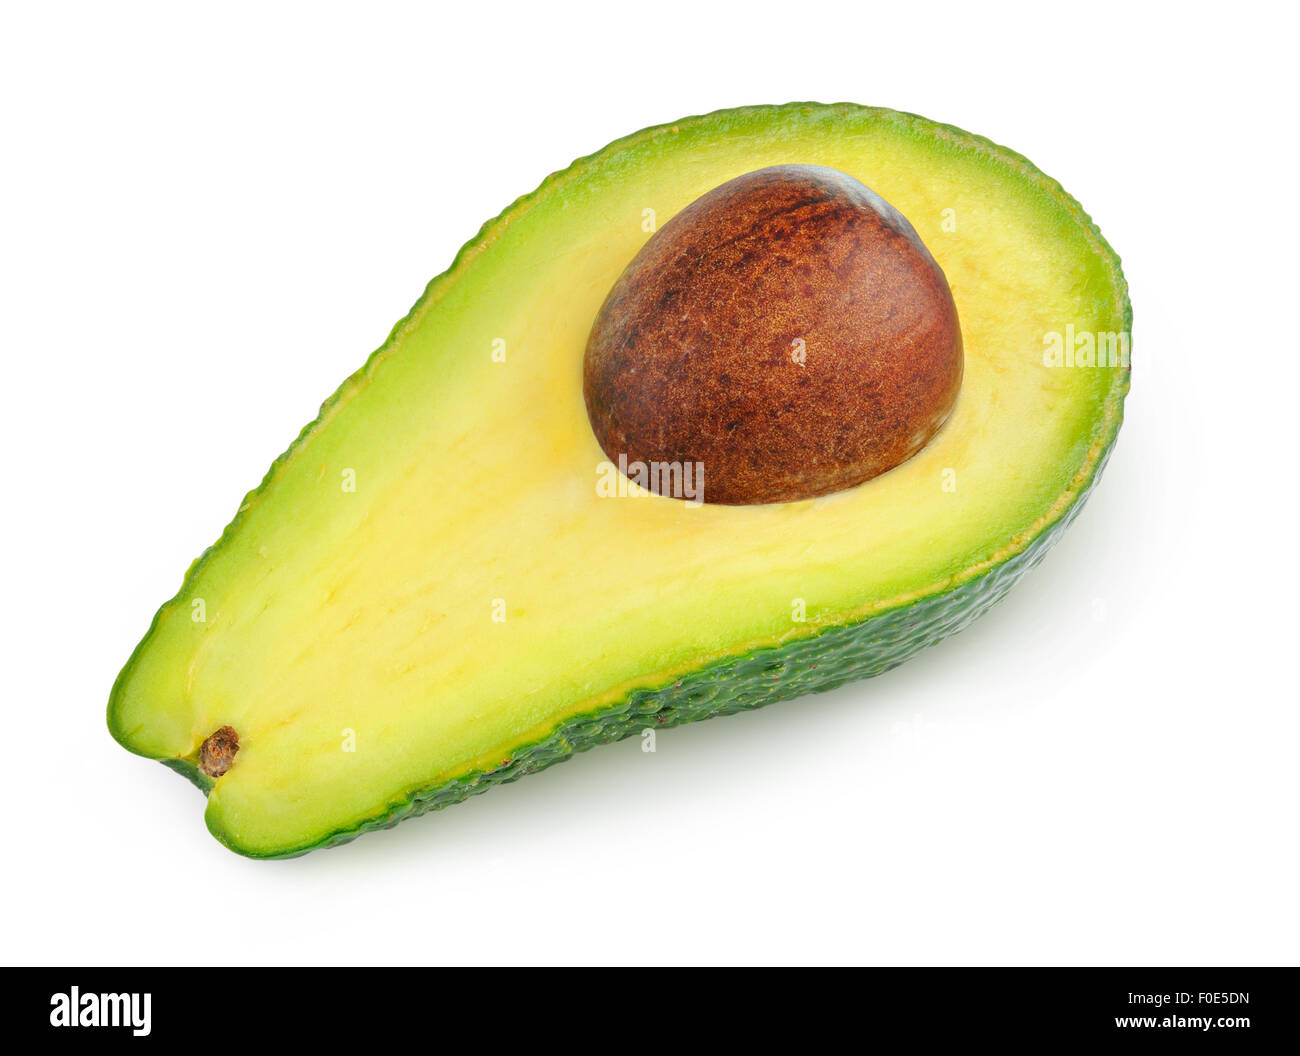 Avocado isolated on white Stock Photo